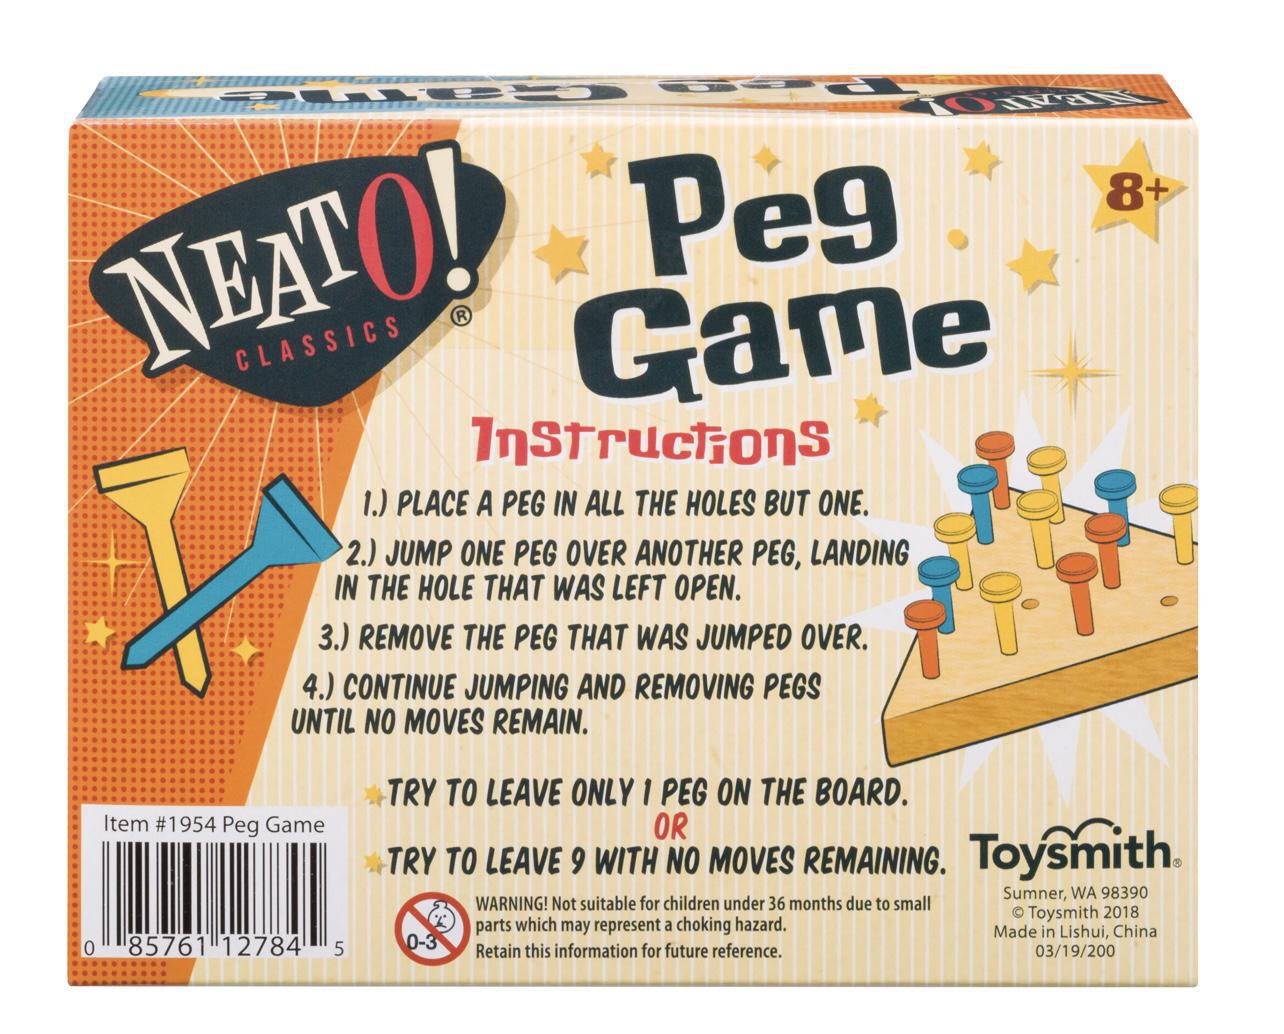 Neato! Classic Wooden Peg Game